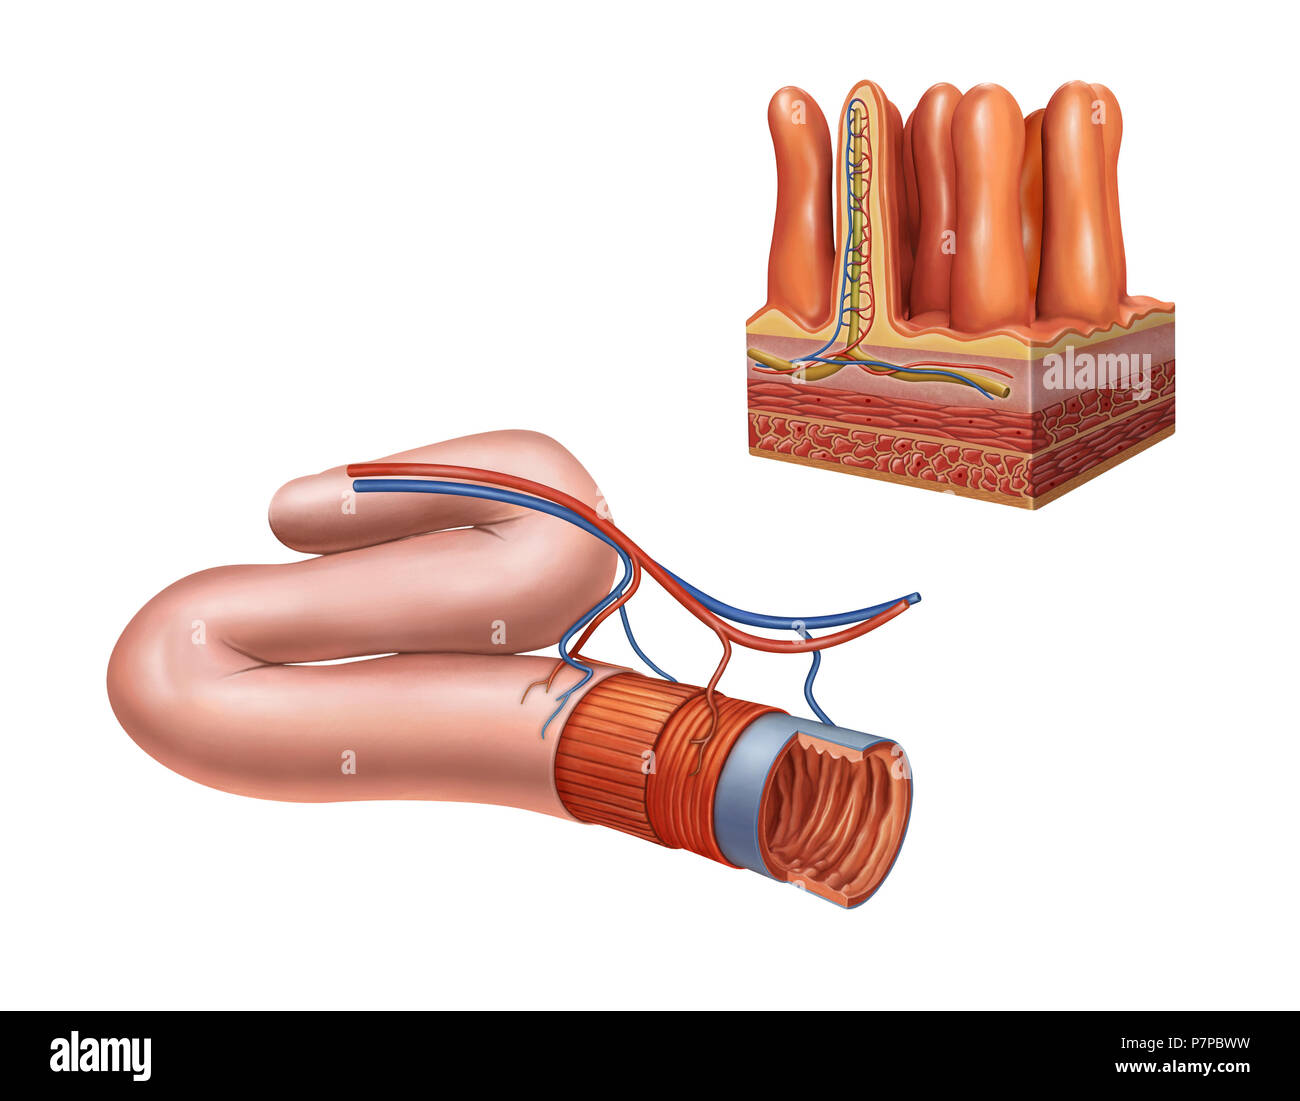 Dünndarm Anatomie. Digitale Illustration. Stockfoto